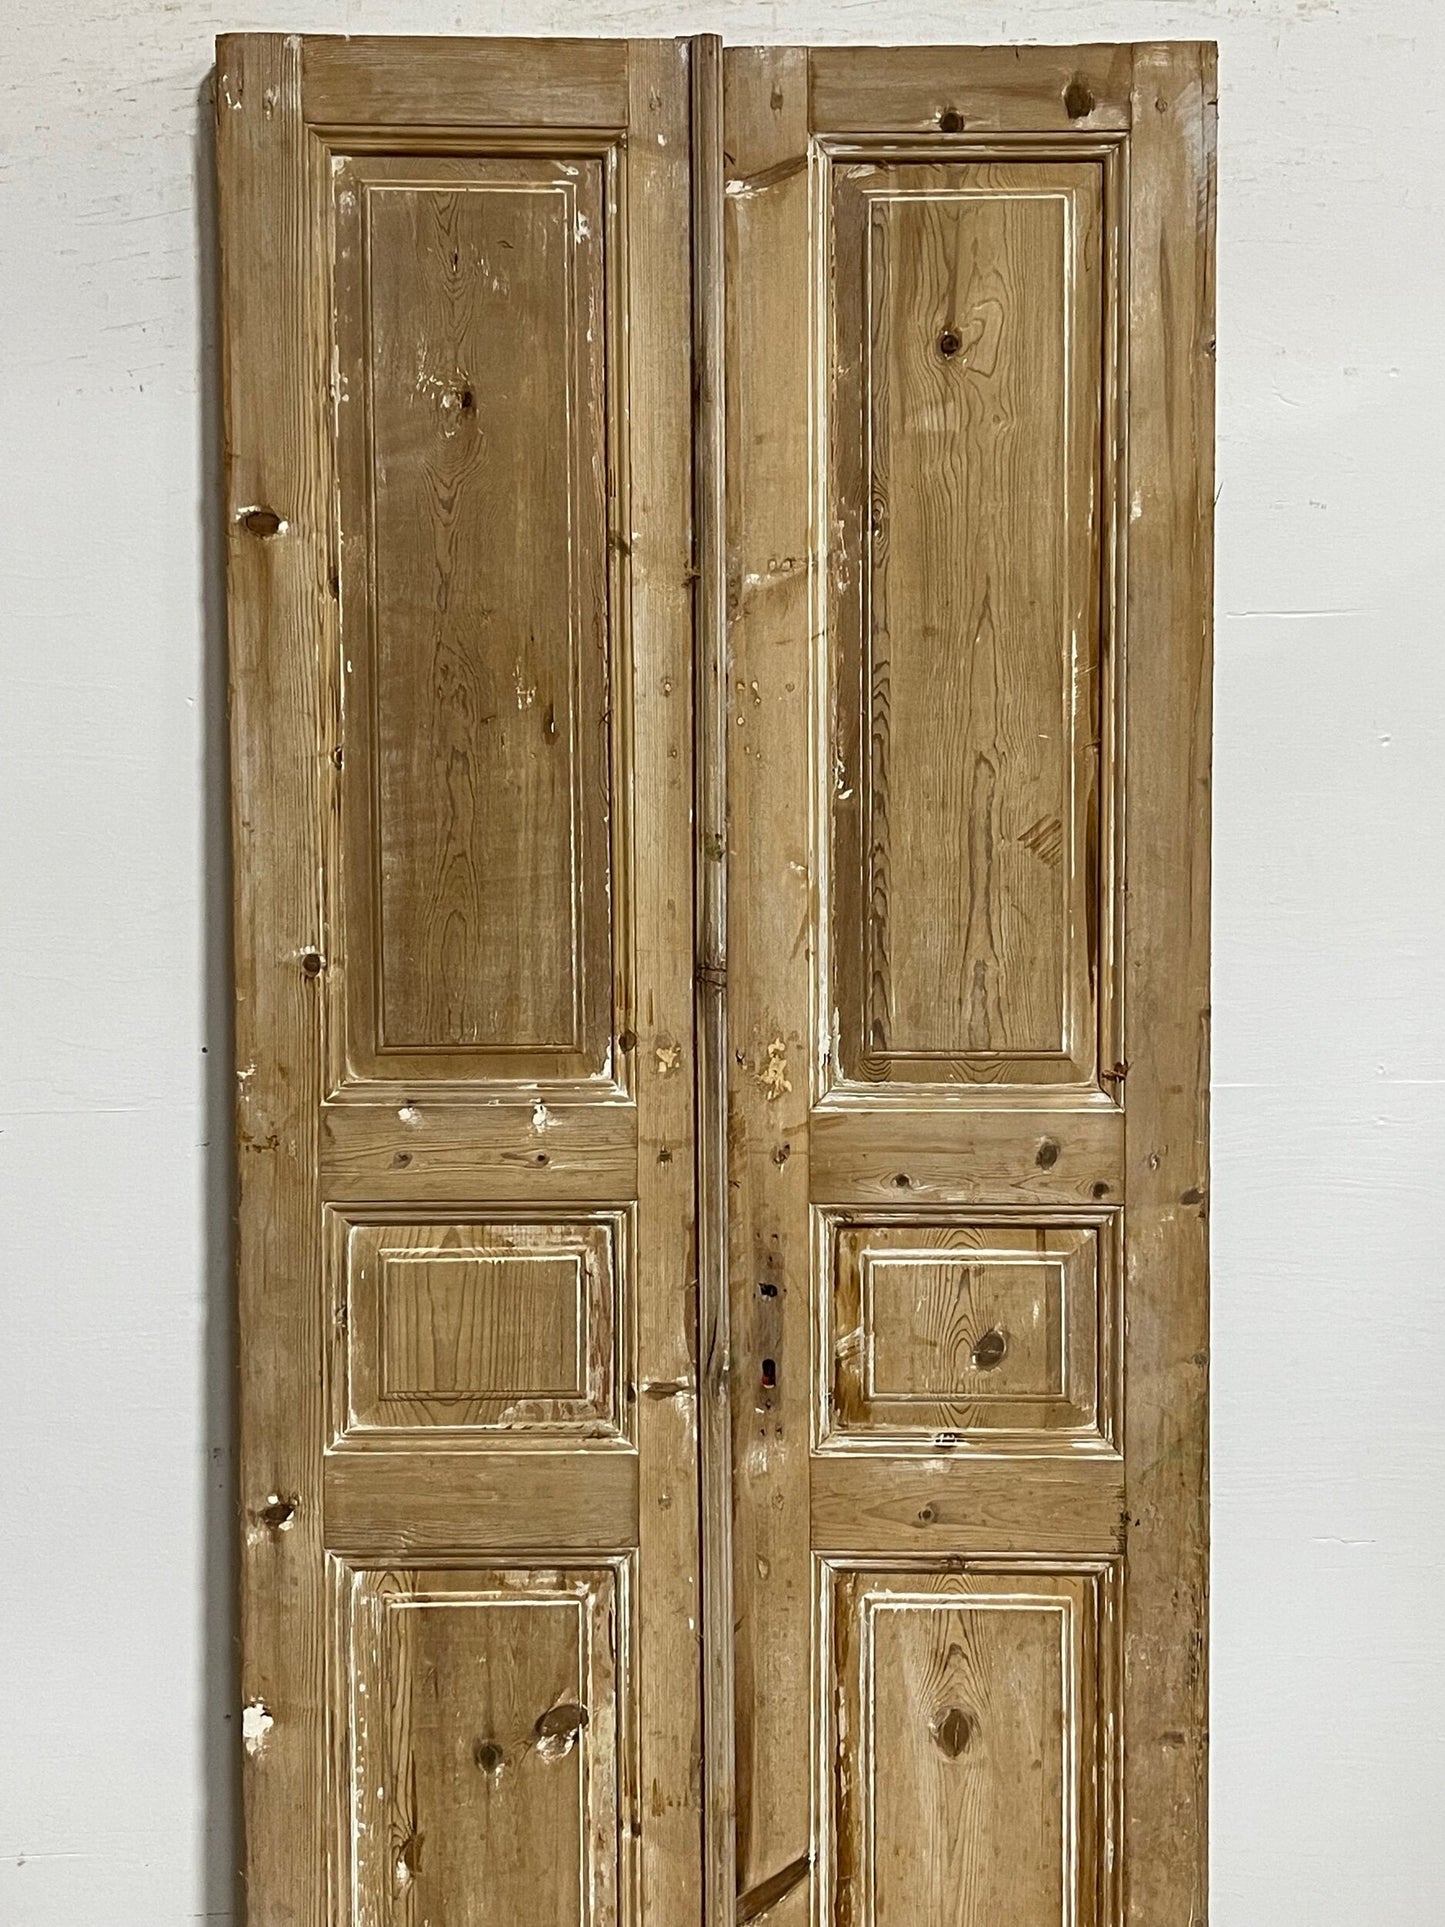 Antique French panel doors (89 x 38.25) I089